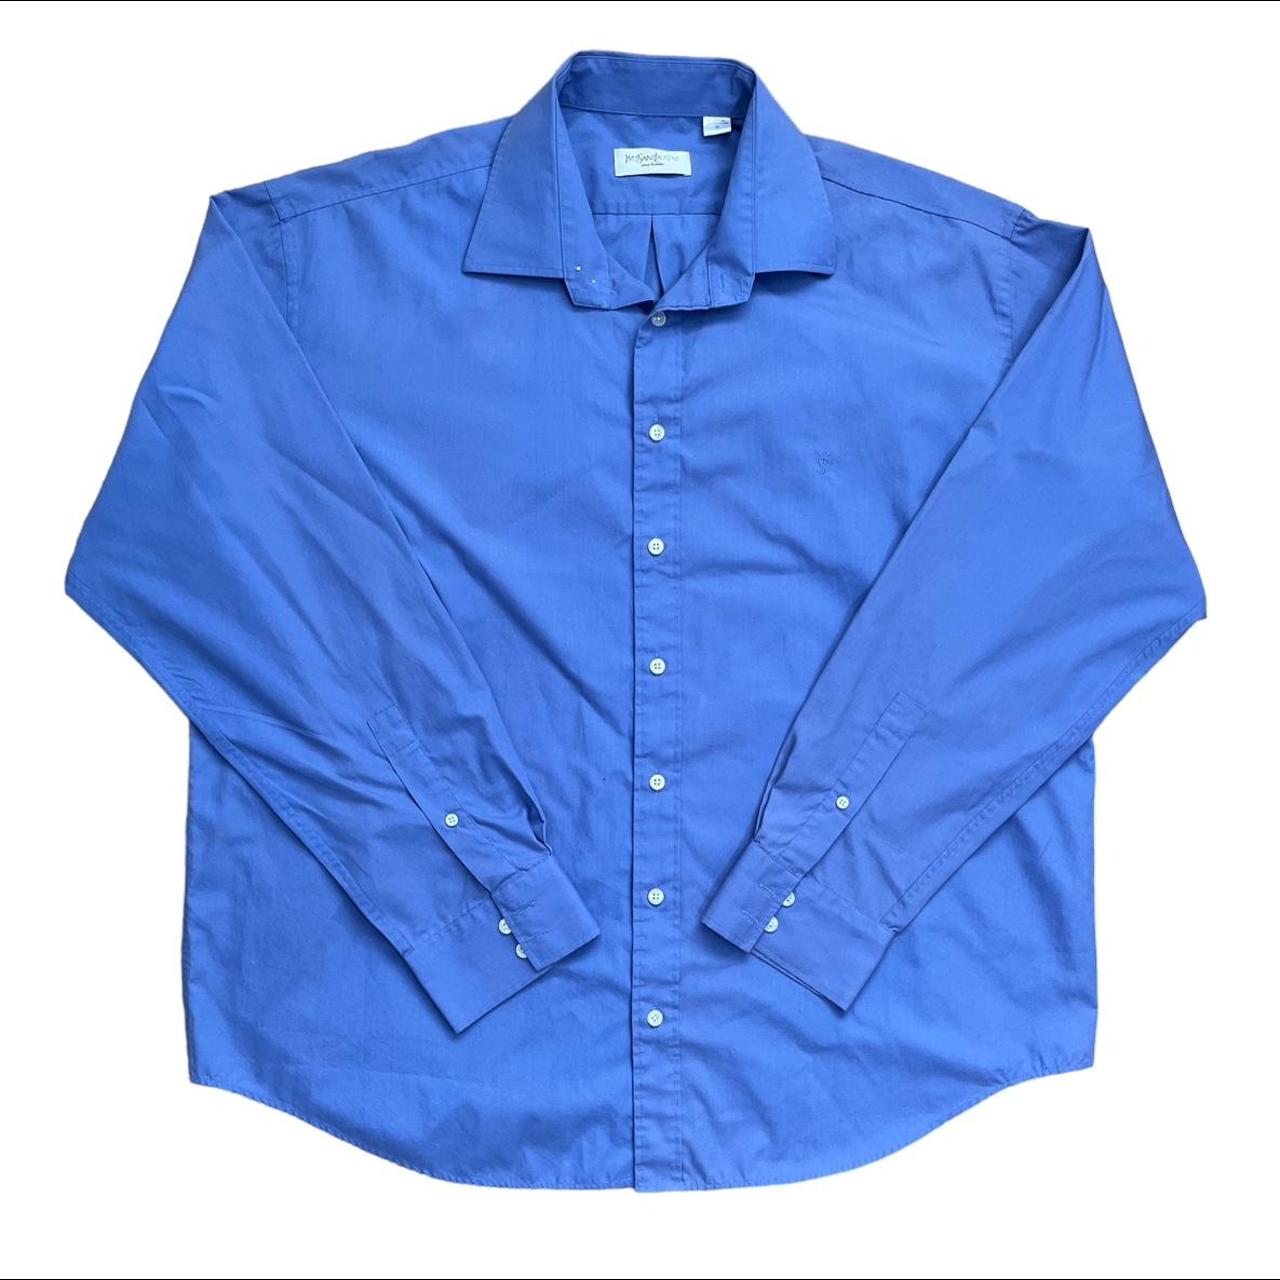 Yves Saint Laurent Men's Blue Shirt | Depop